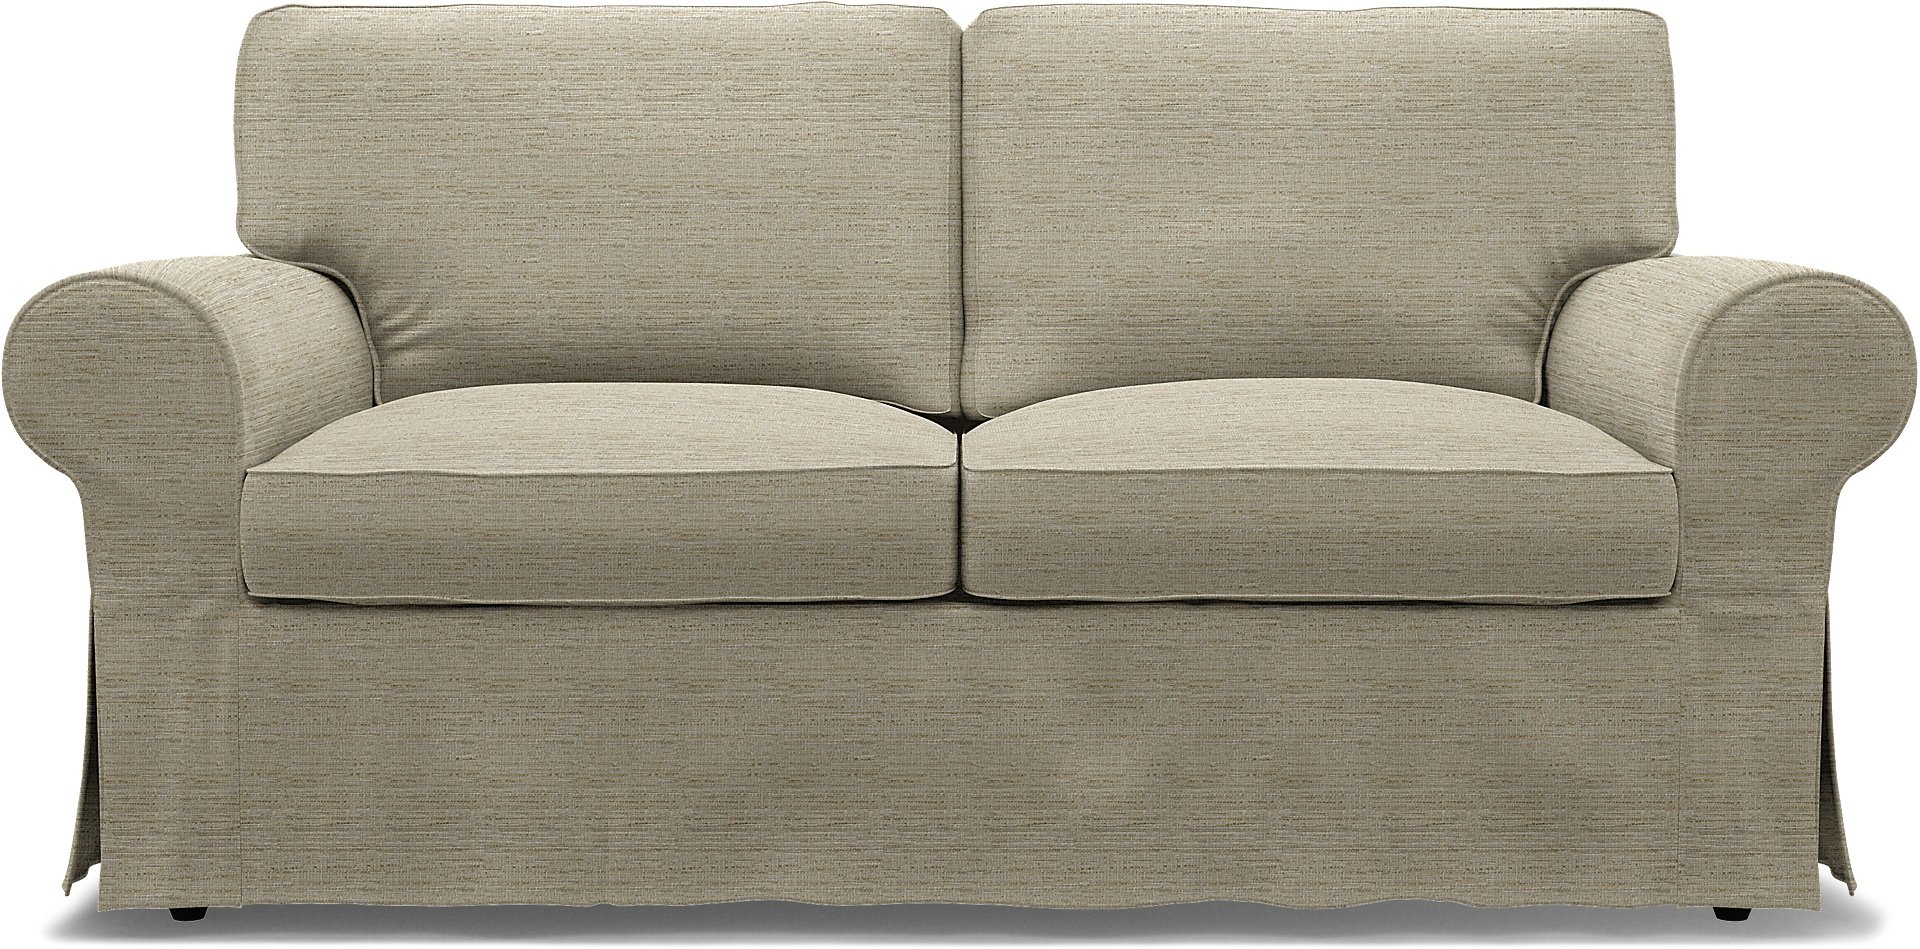 IKEA - Ektorp 2 Seater Sofa Bed Cover, Light Sand, Boucle & Texture - Bemz